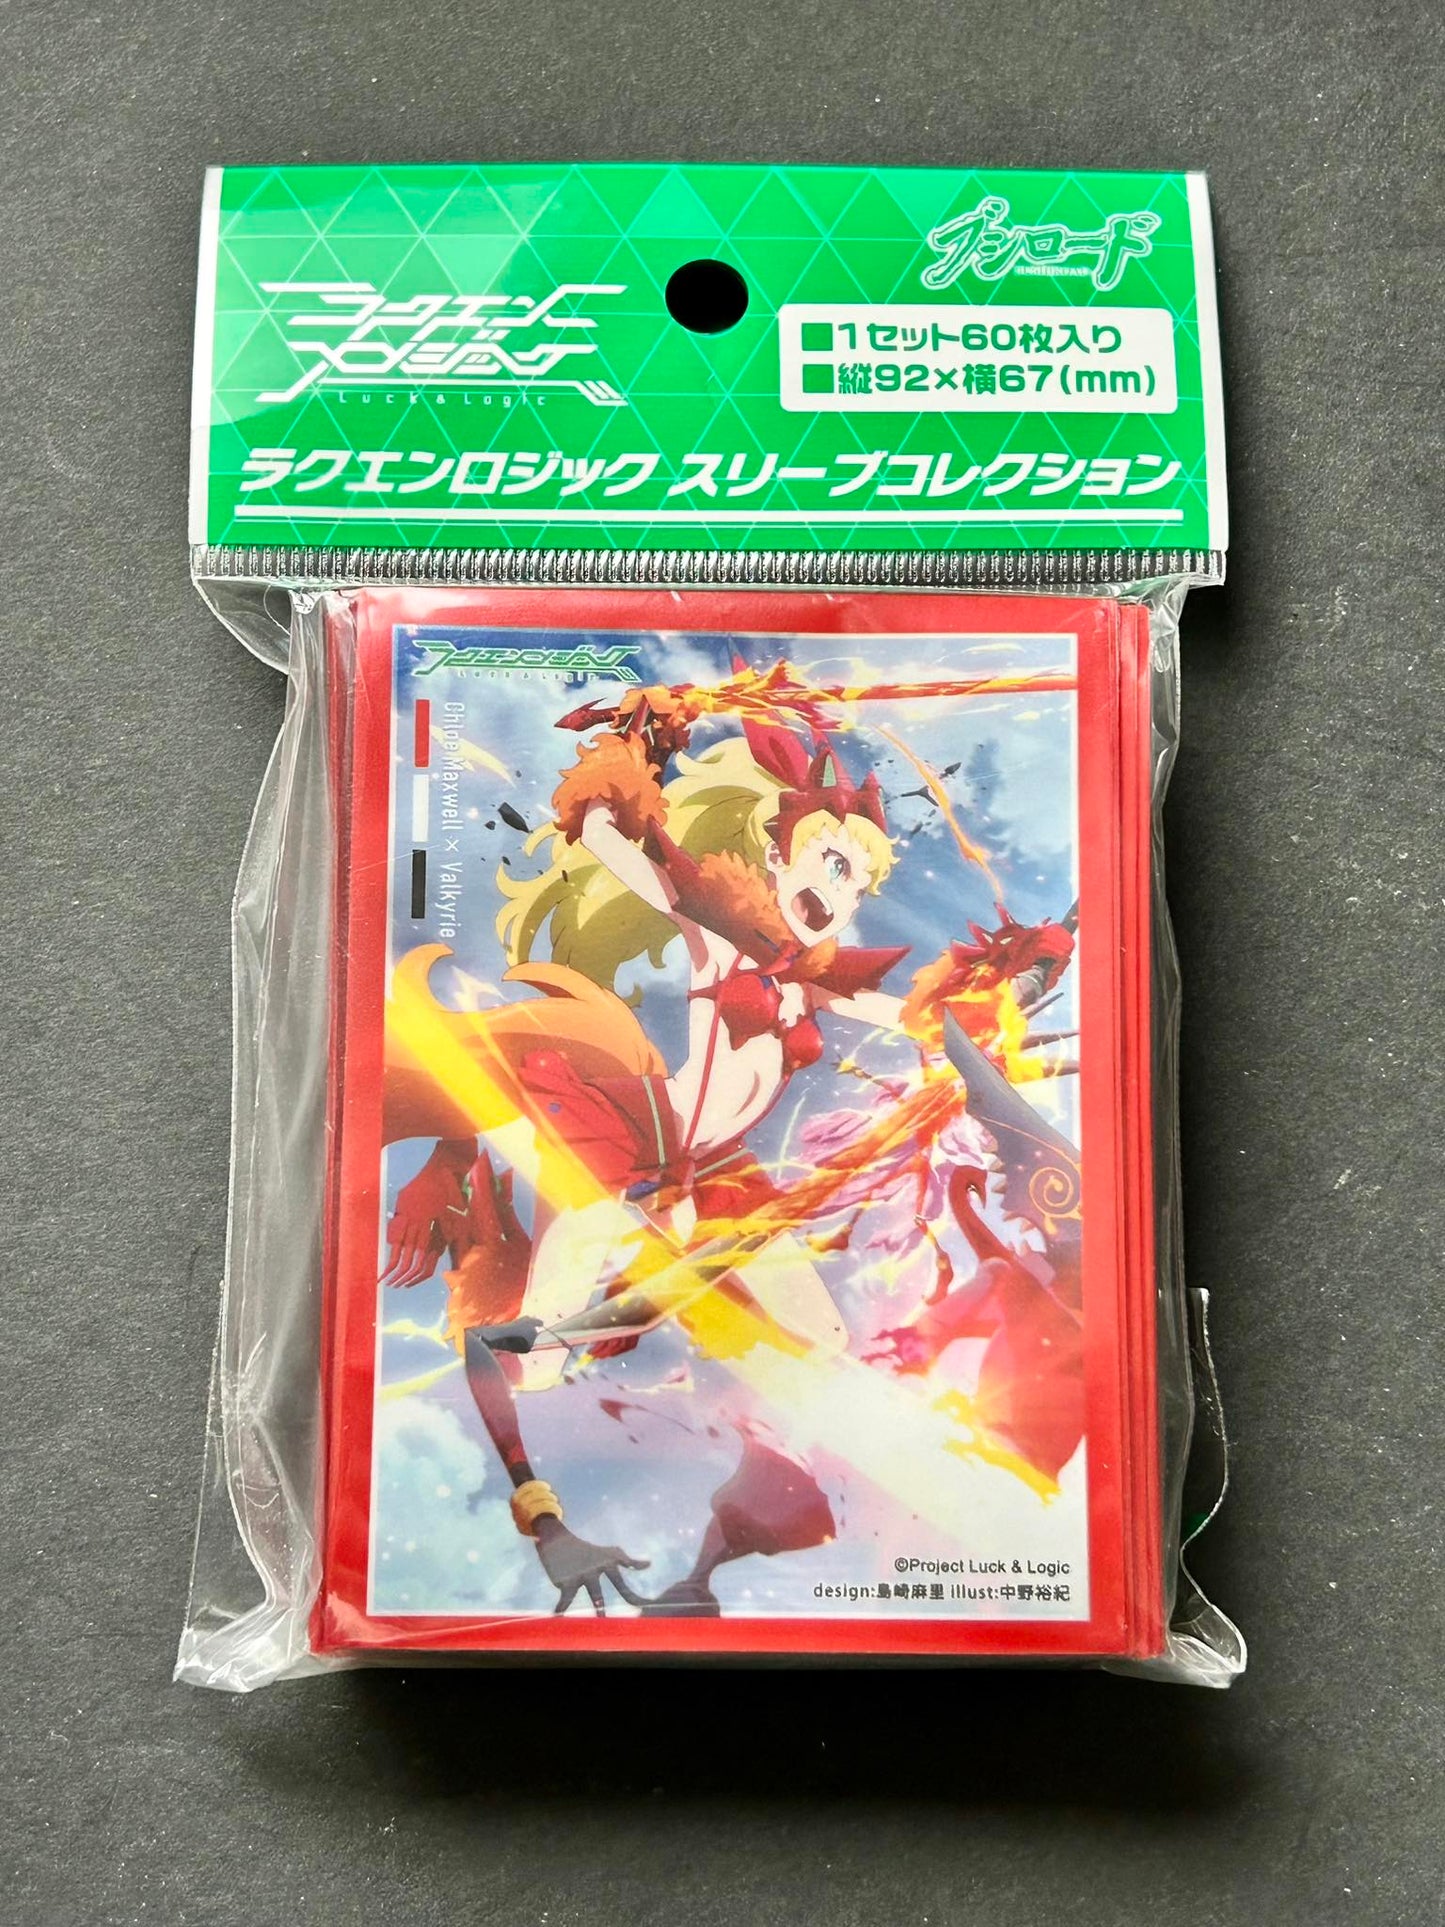 Luck &amp; Logic Sleeve collectie vol 8 Tsurugi no Mai Chloe 60st [Japan Import]